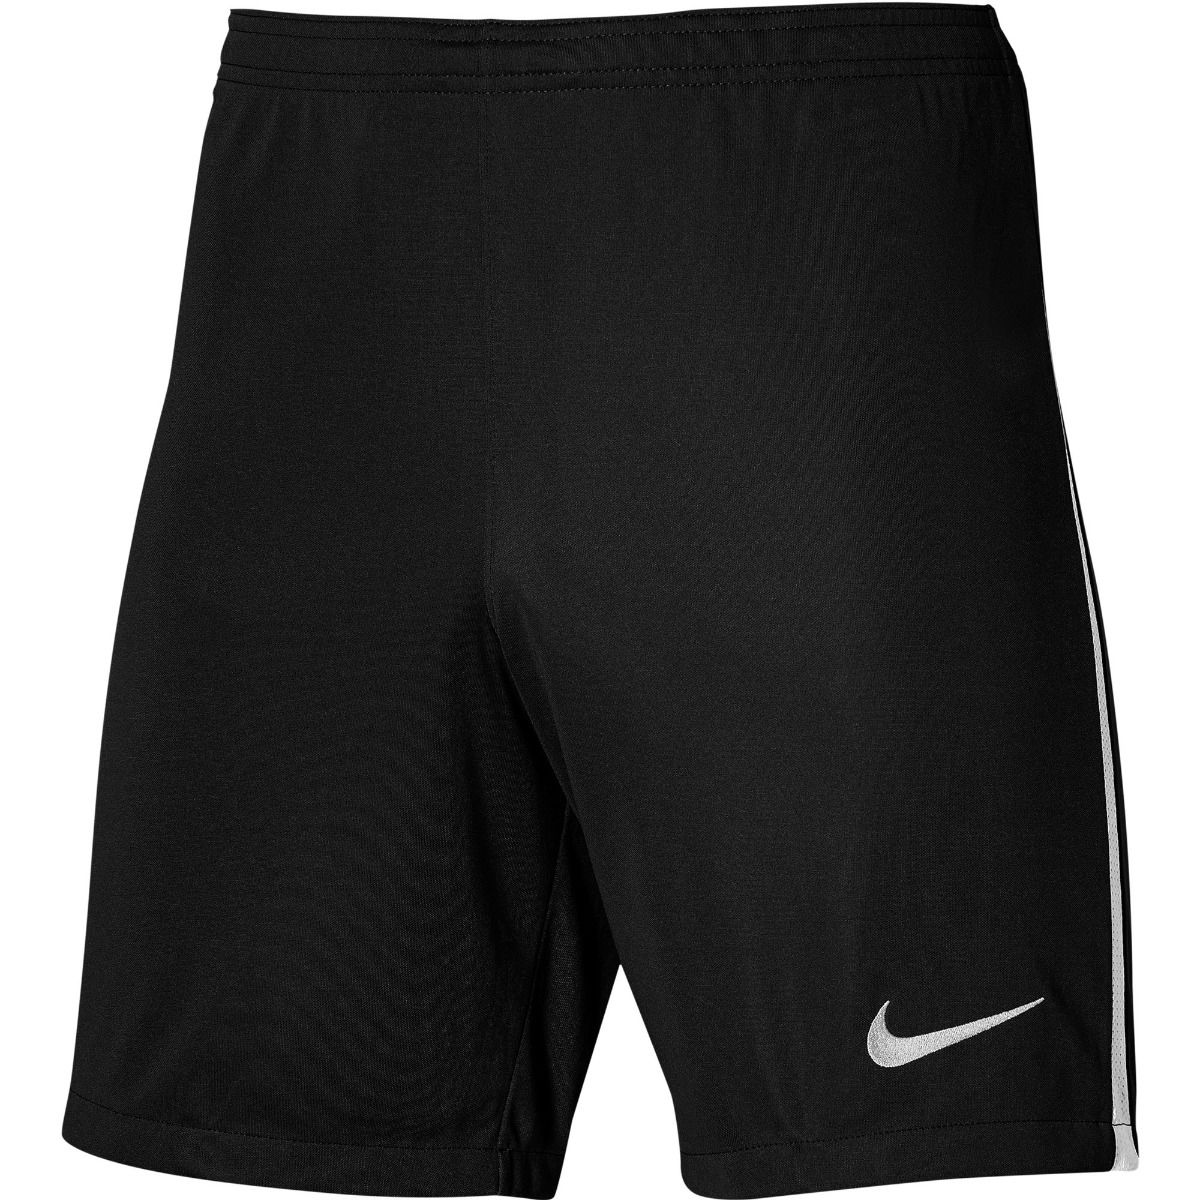 Calções Nike League III Knit Short